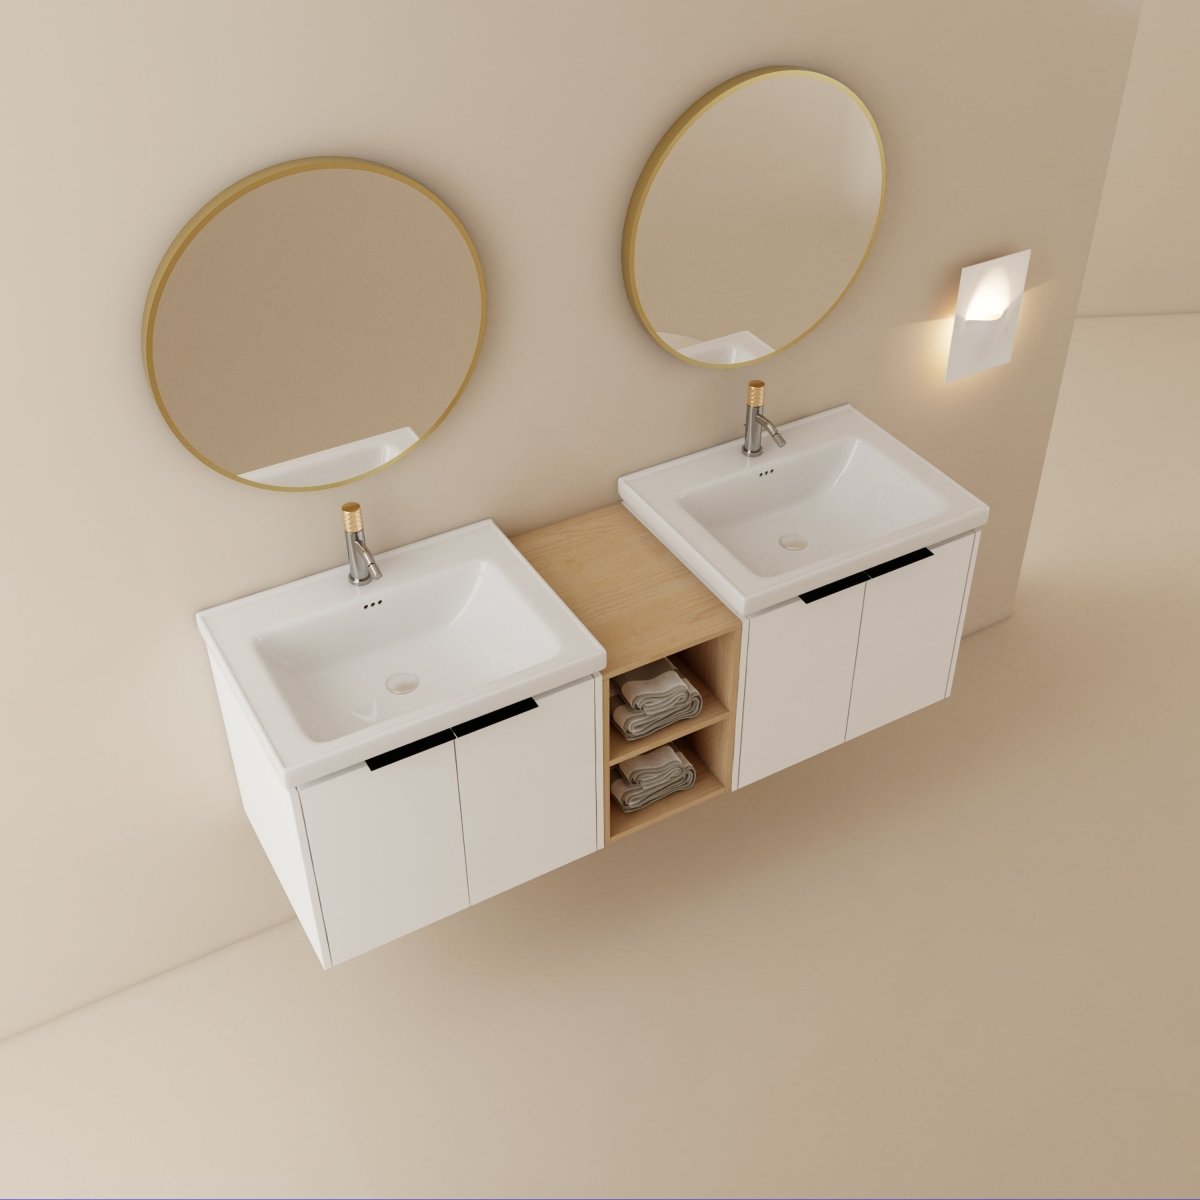 ExBrite 60 Inch Soft Close Doors Double Sink Bathroom Vanity Small Storage Shelves